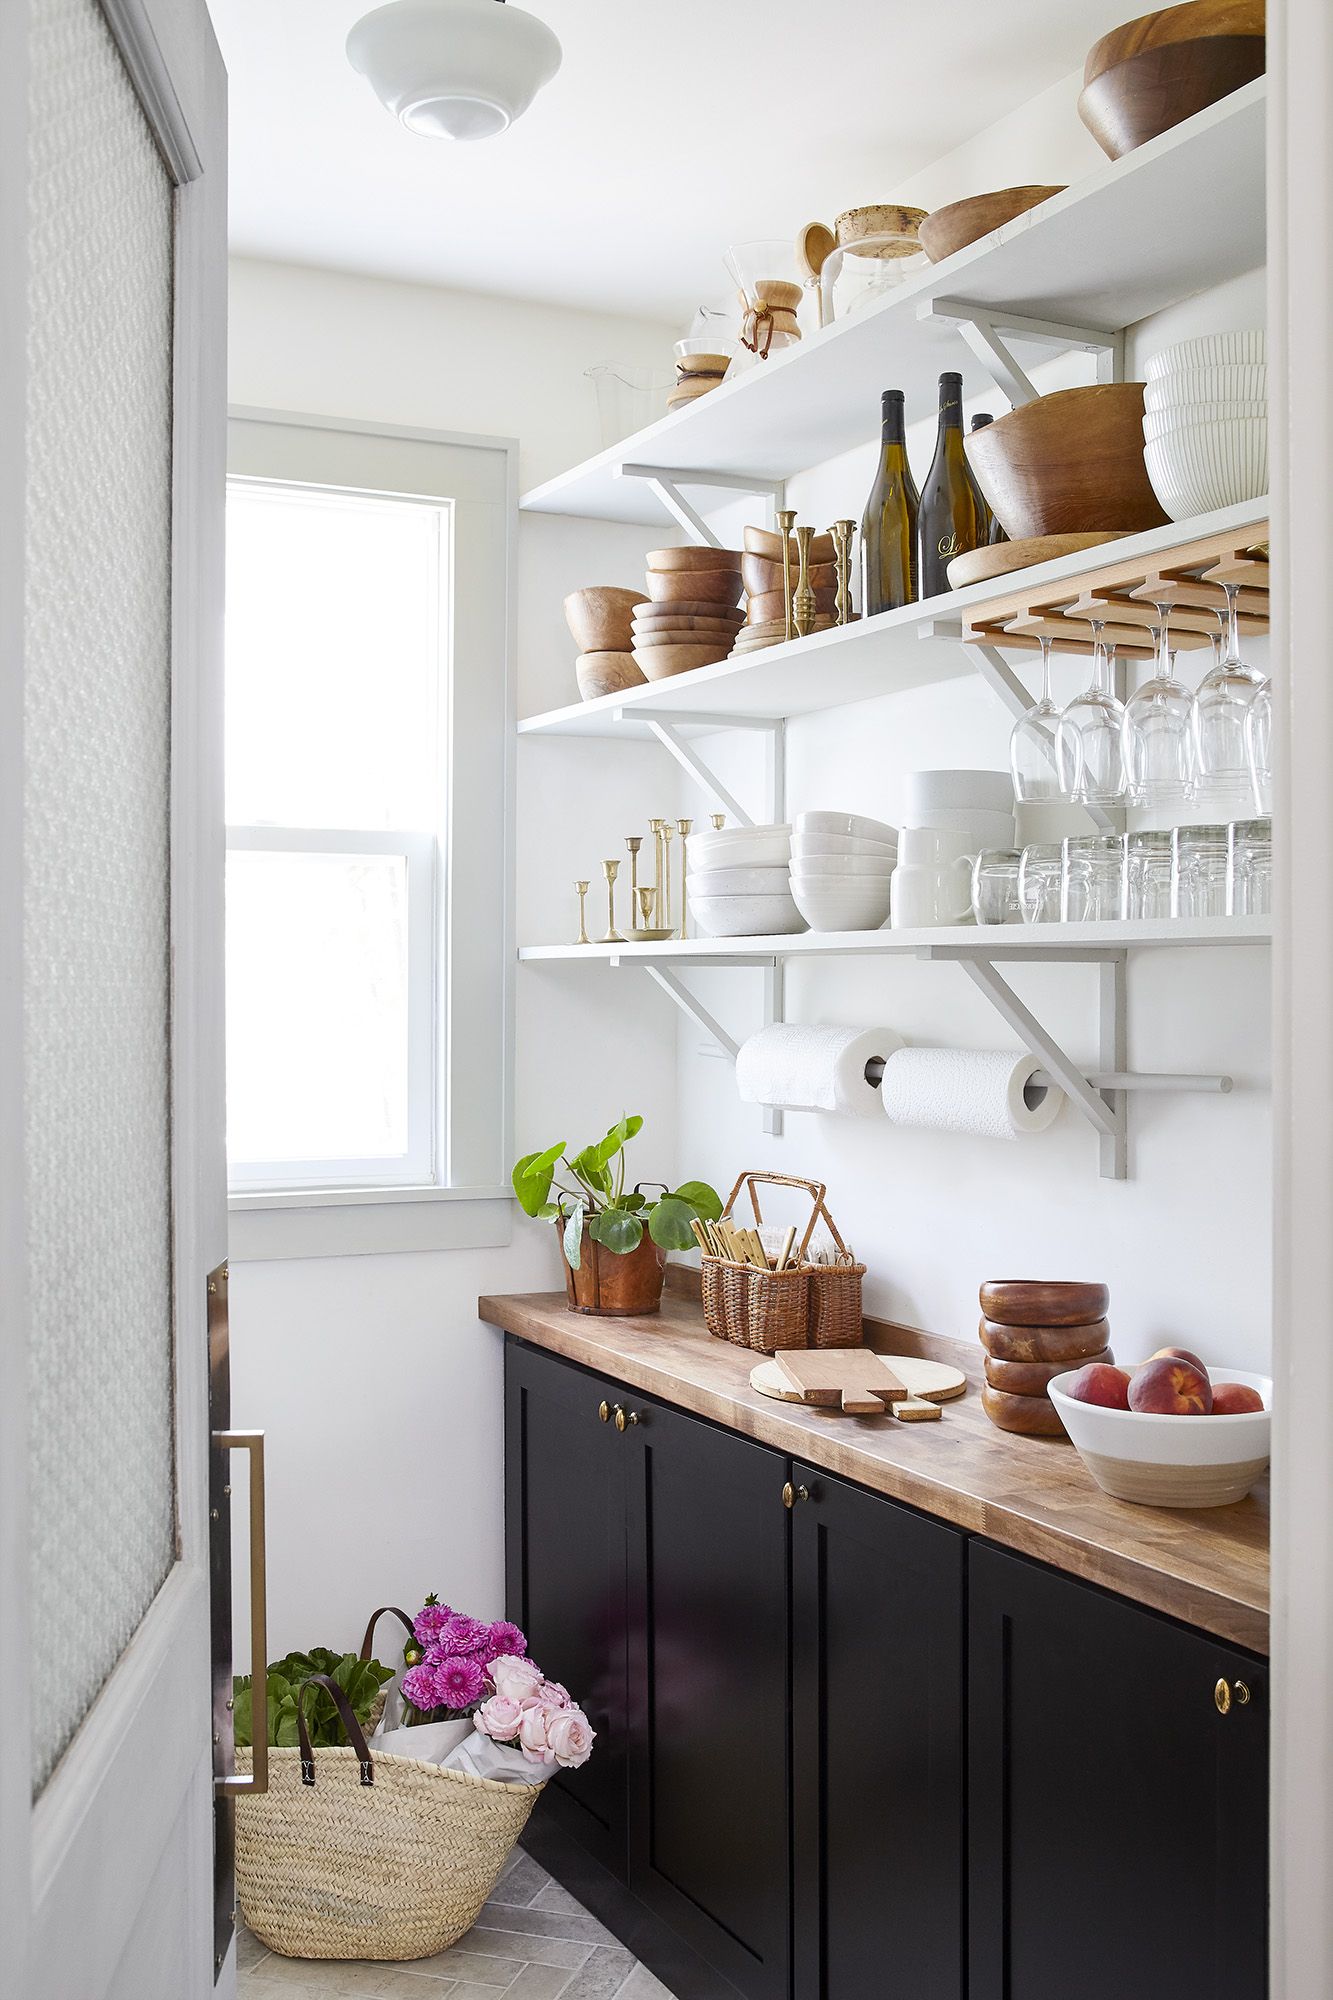 The small kitchen storage ideas to revamp your kitchen